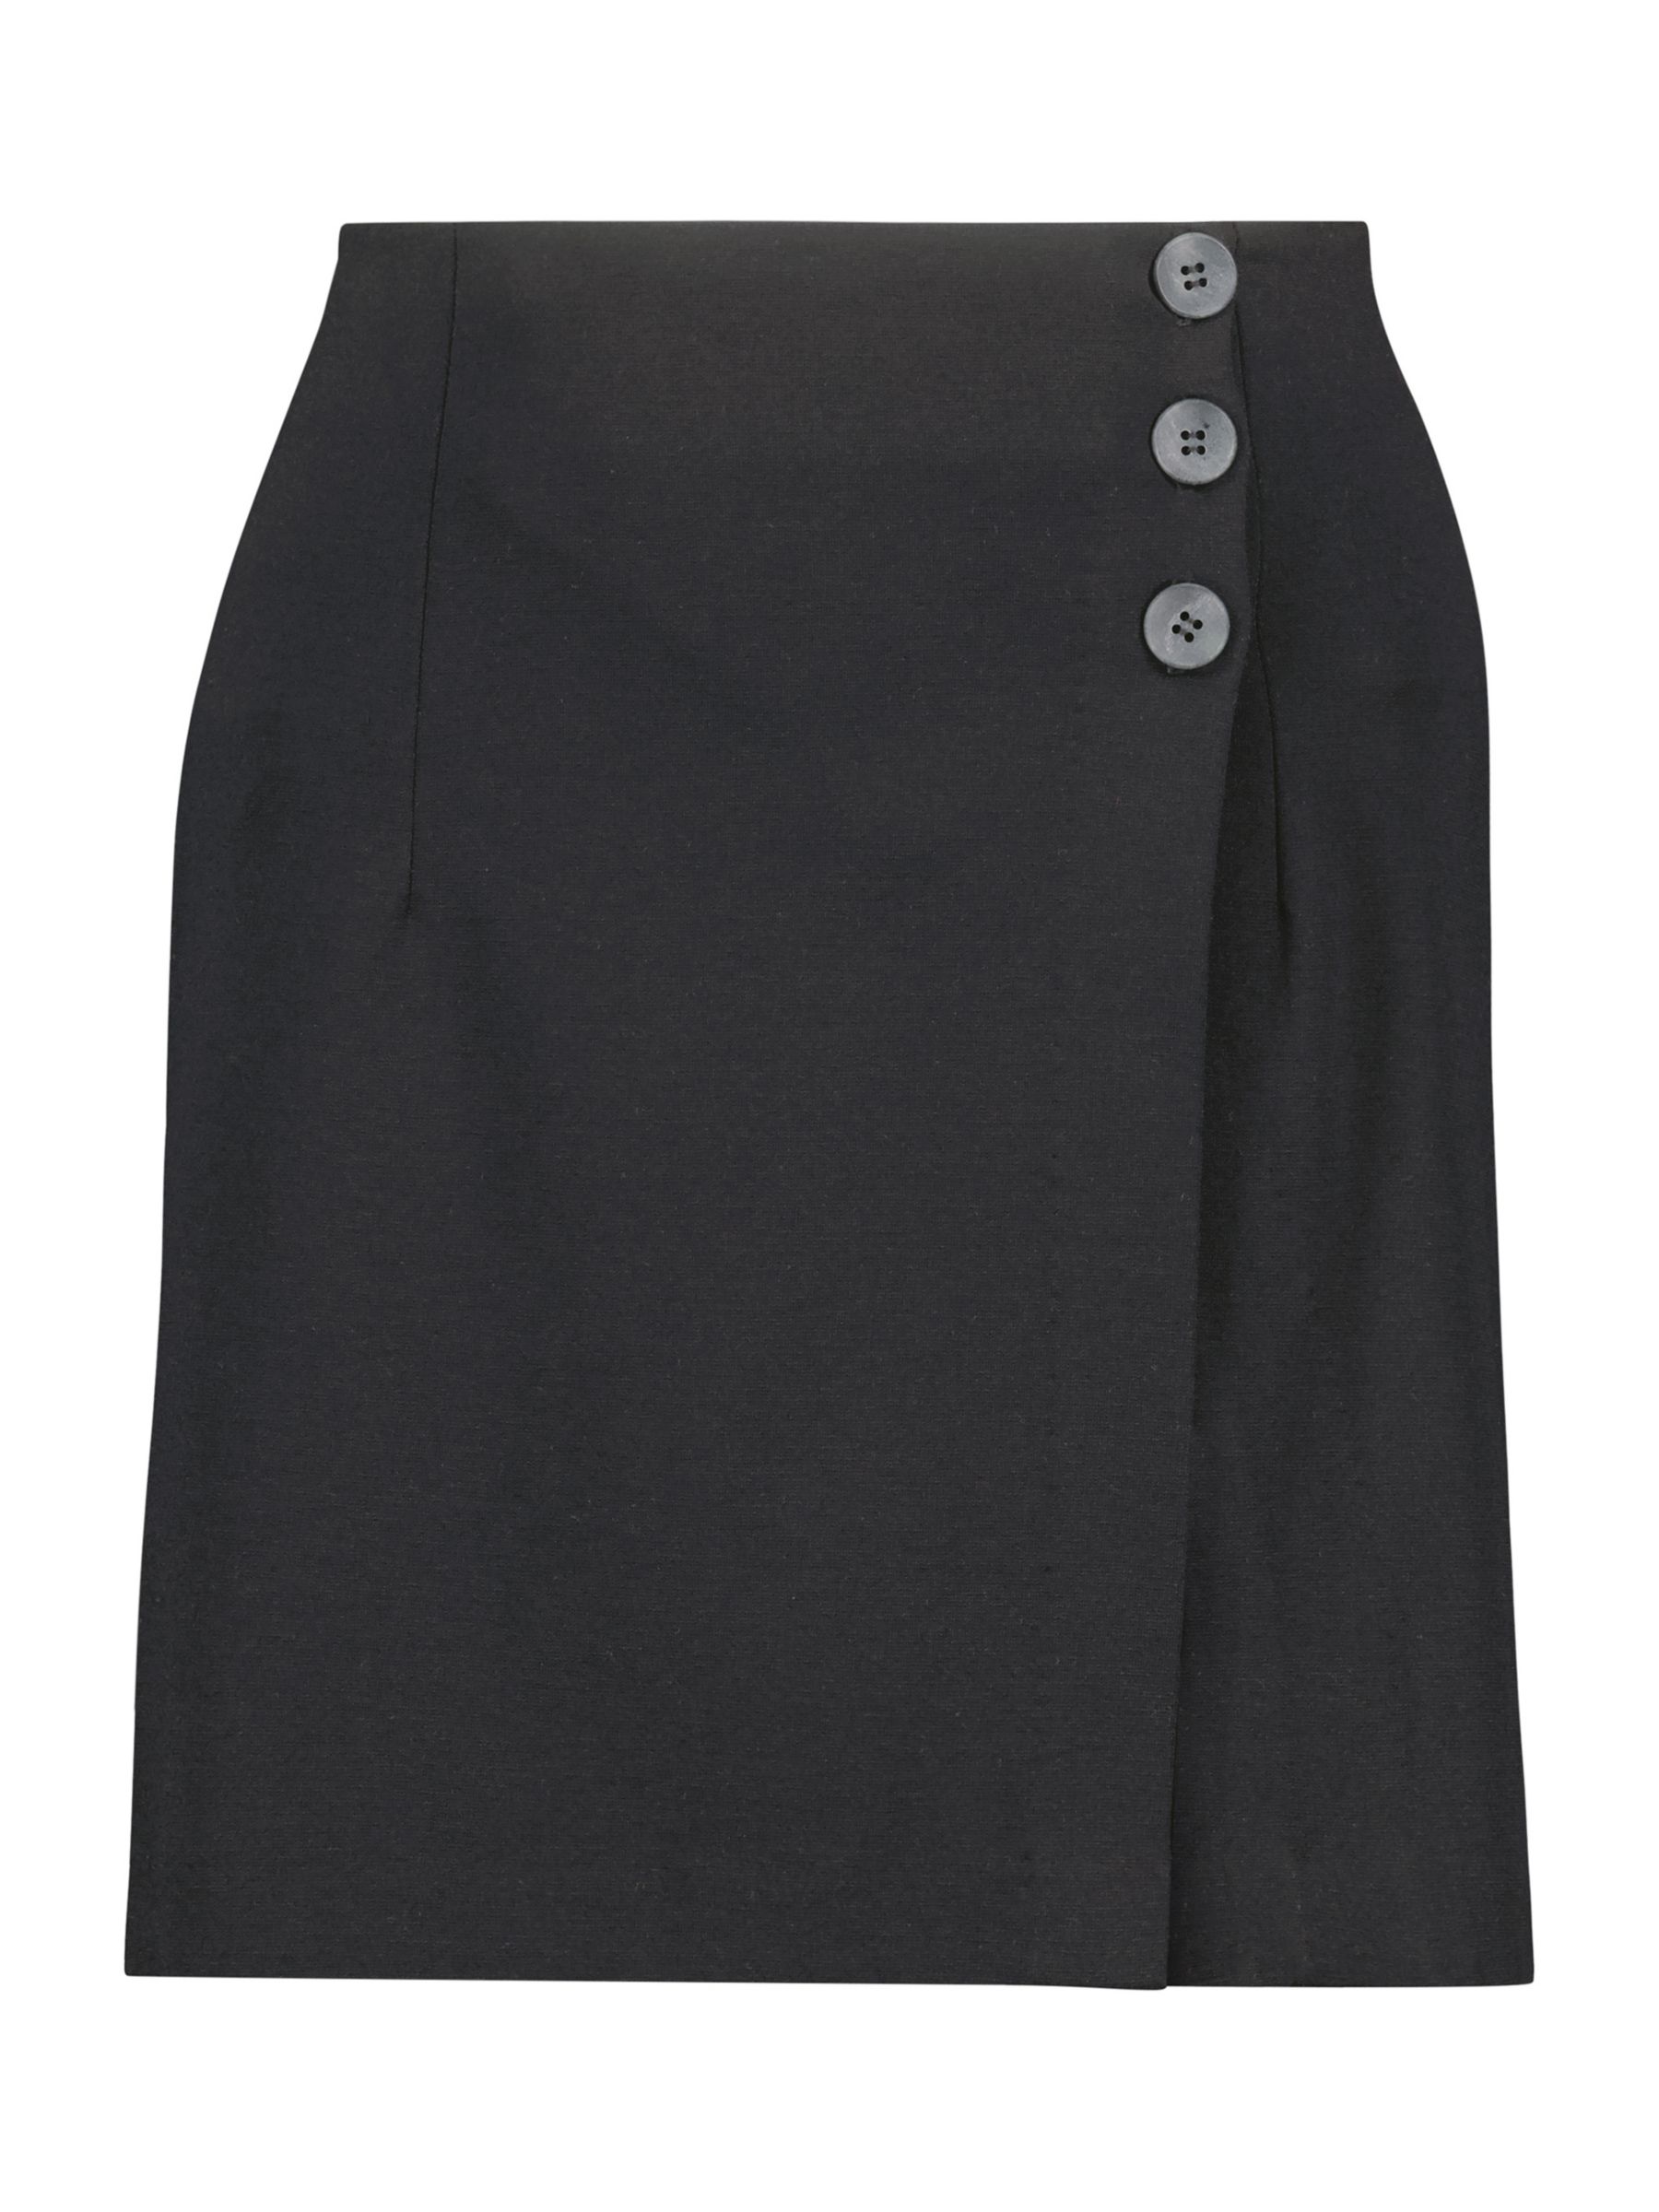 Baukjen Marais Mini Skirt, Caviar Black at John Lewis & Partners